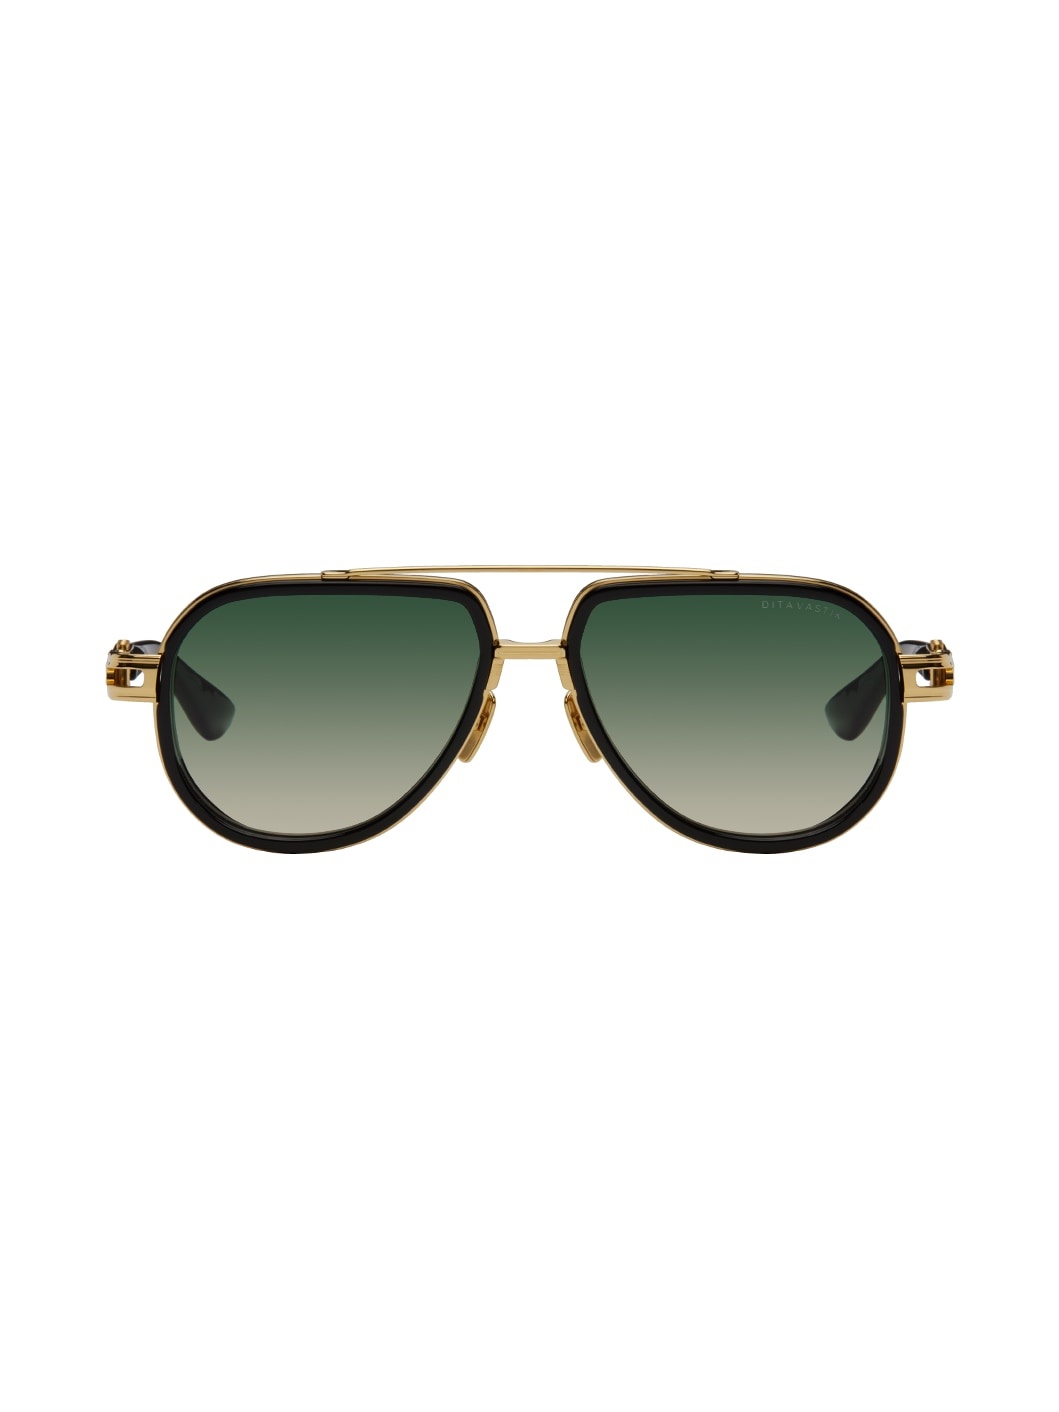 Black & Gold Vastik Sunglasses - 1